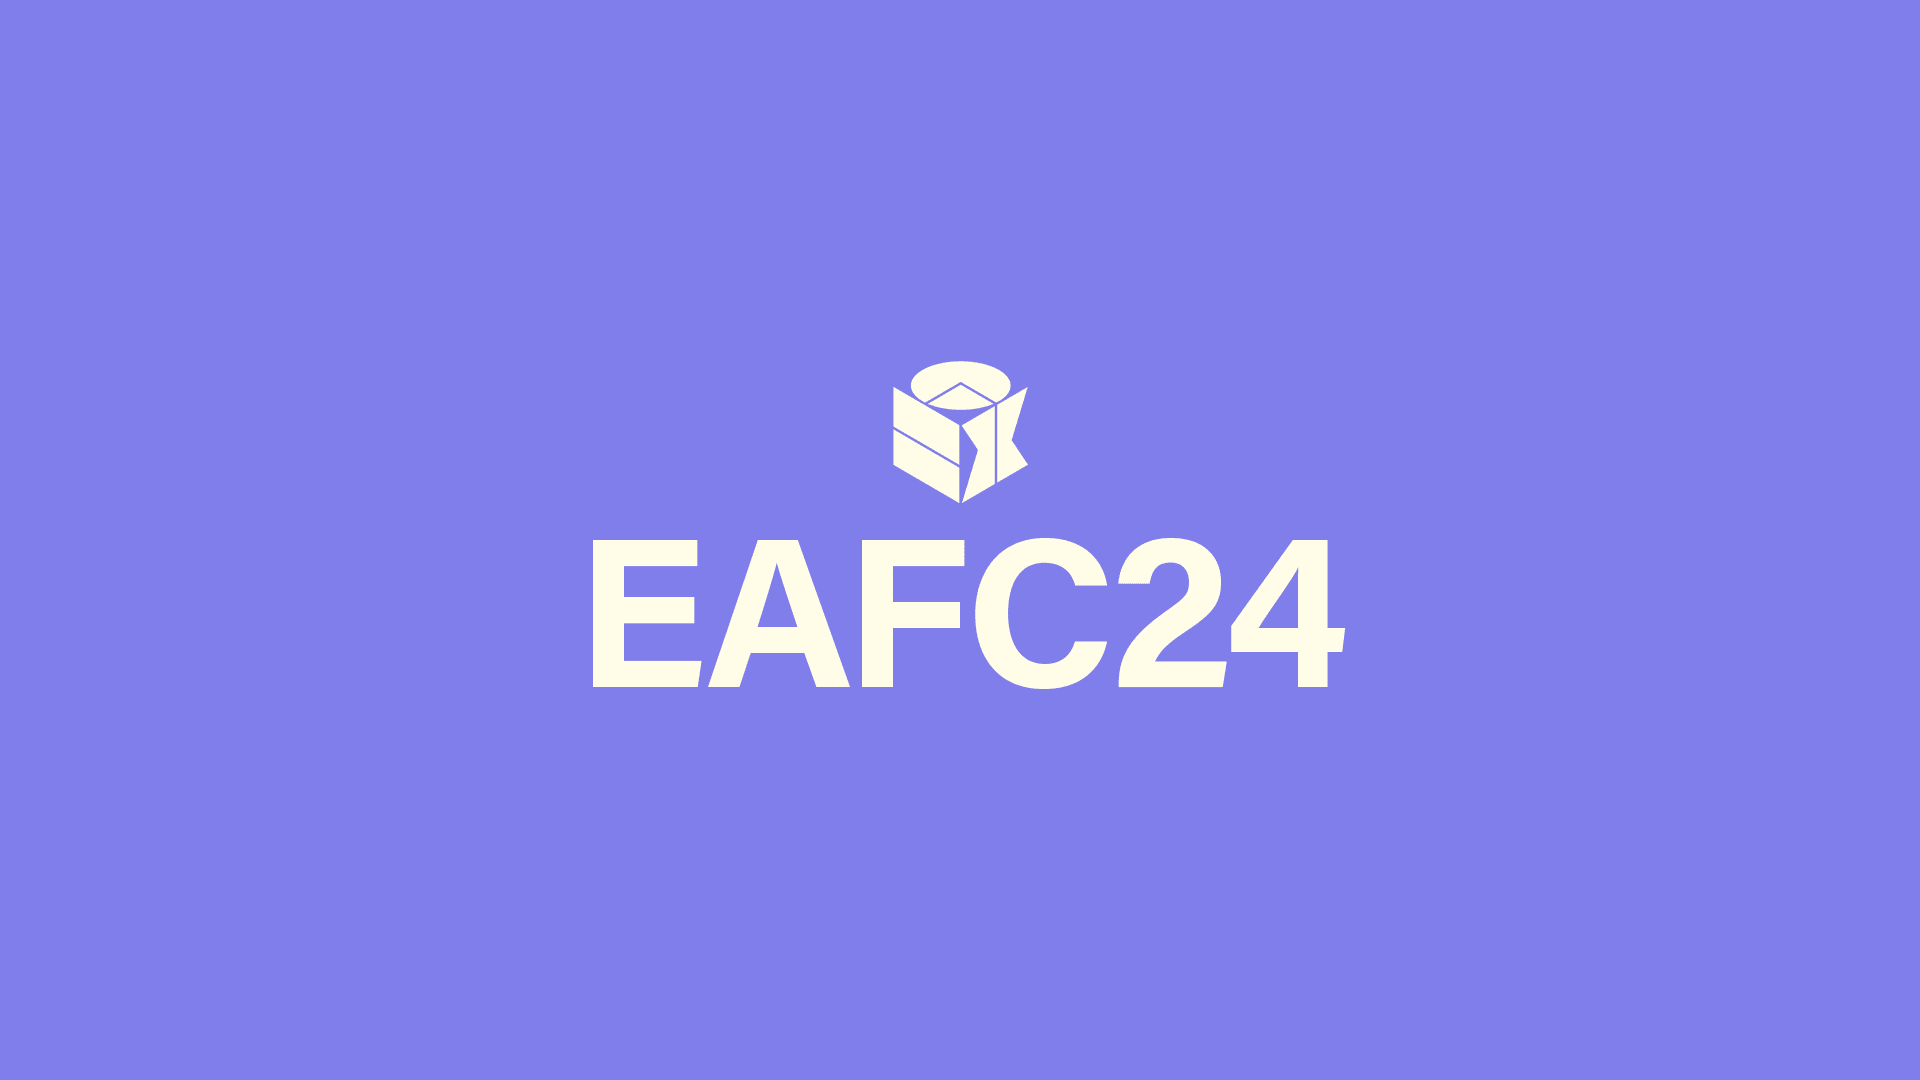 EAFC24 Banner Promo Packs - GFXCRATE